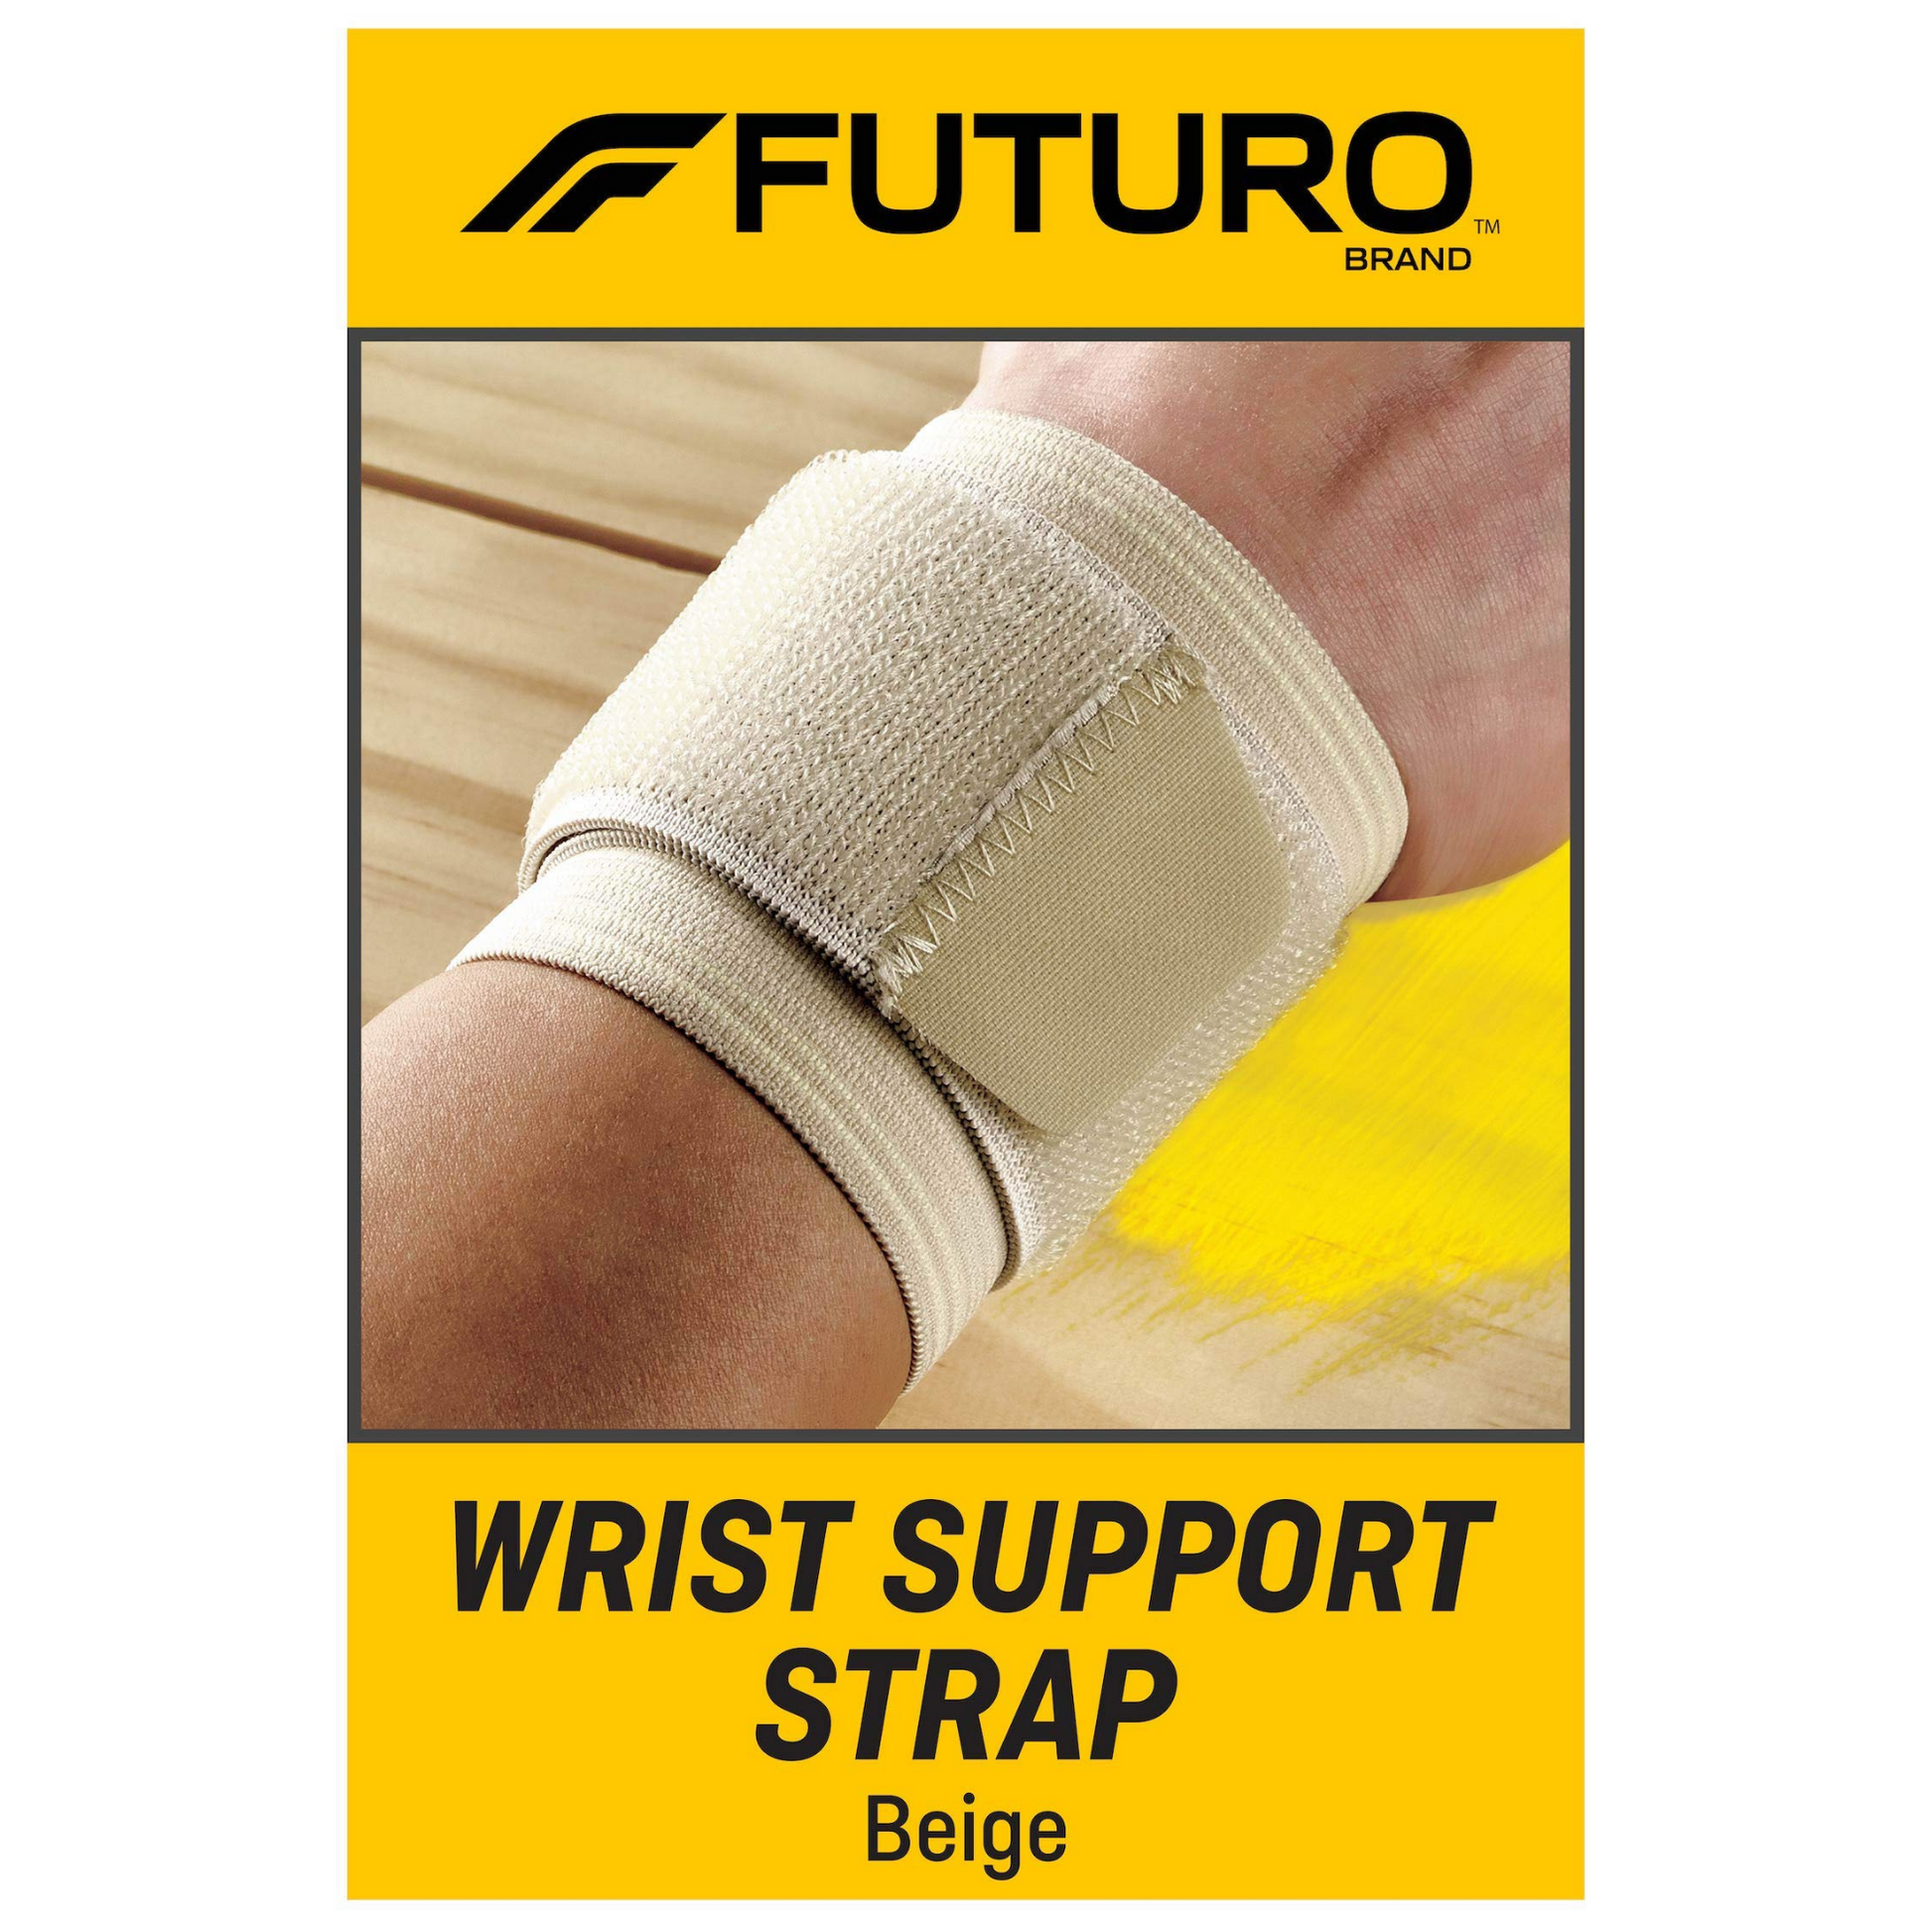 Futuro Sport Adjustable Wrist Support : : Health